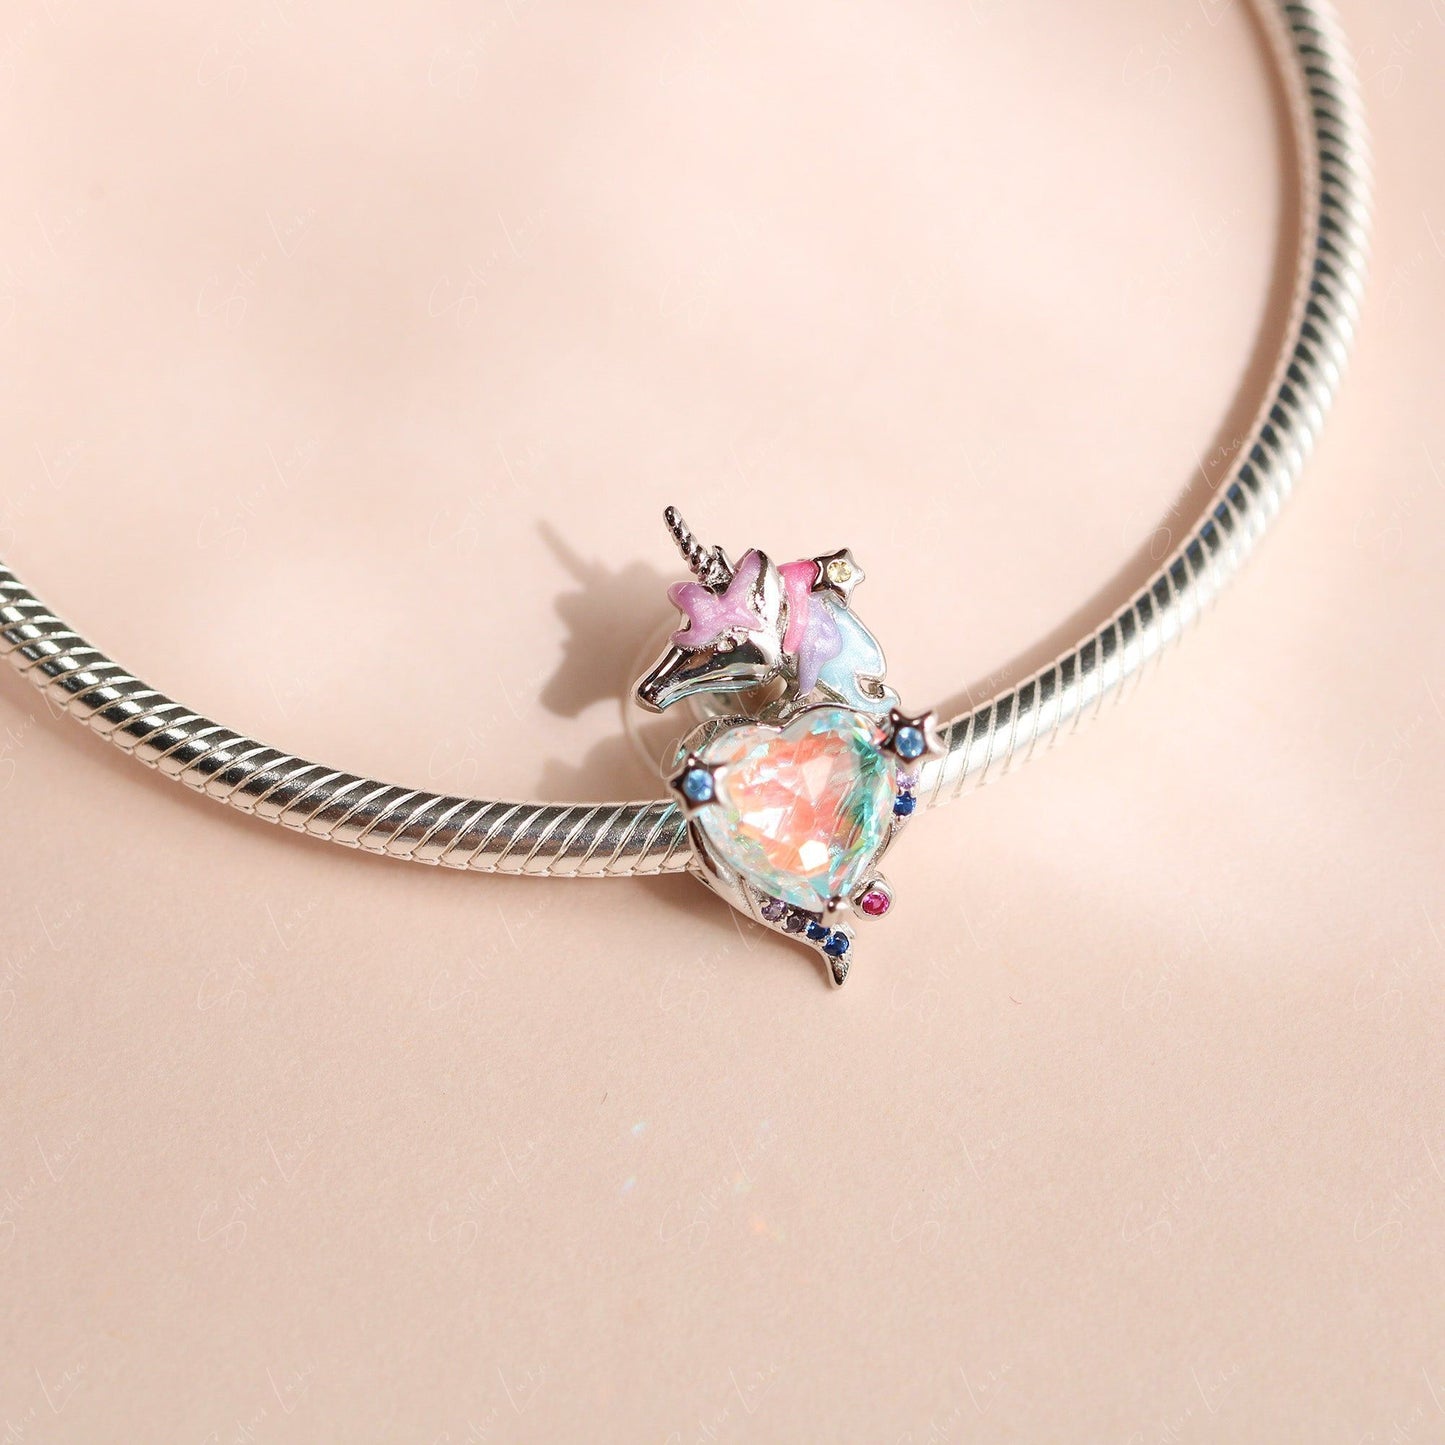 Rainbow and unicorn fantasy charm for bracelet